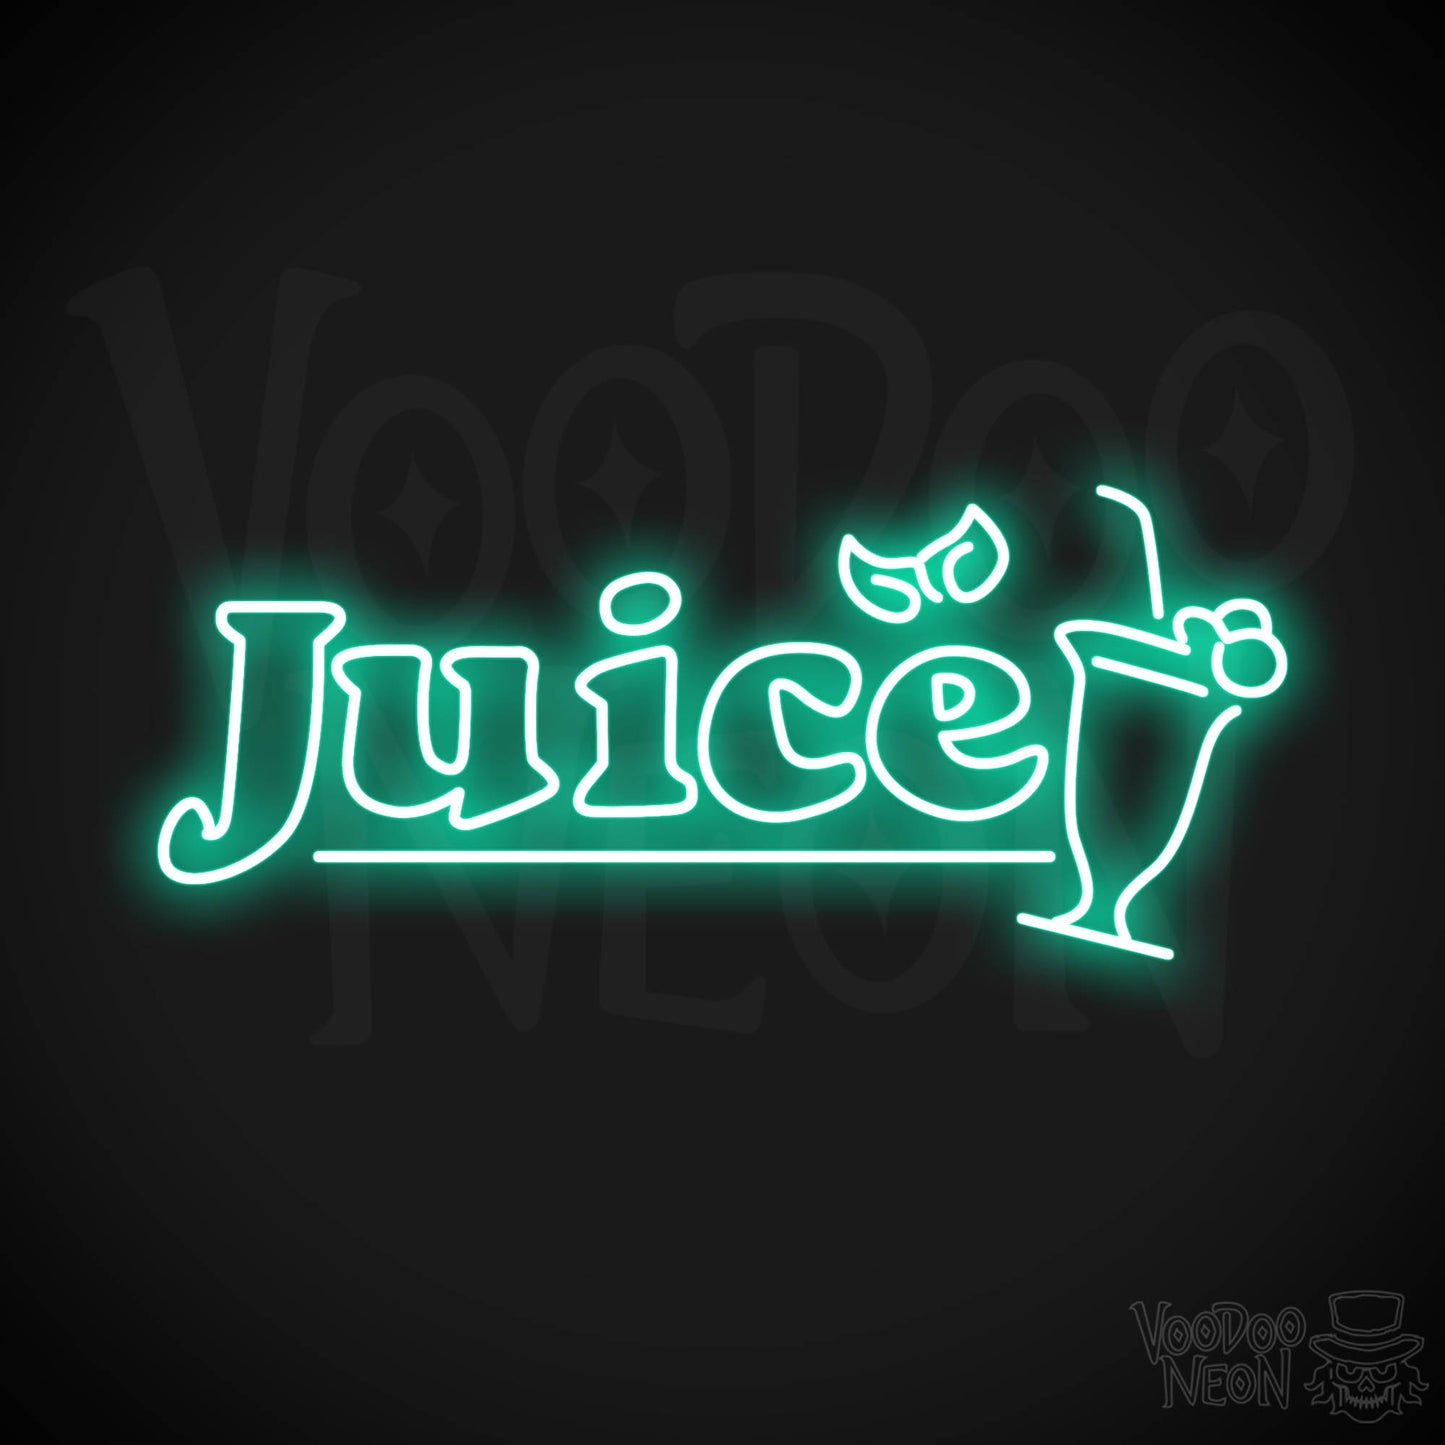 Juice LED Neon - Light Green